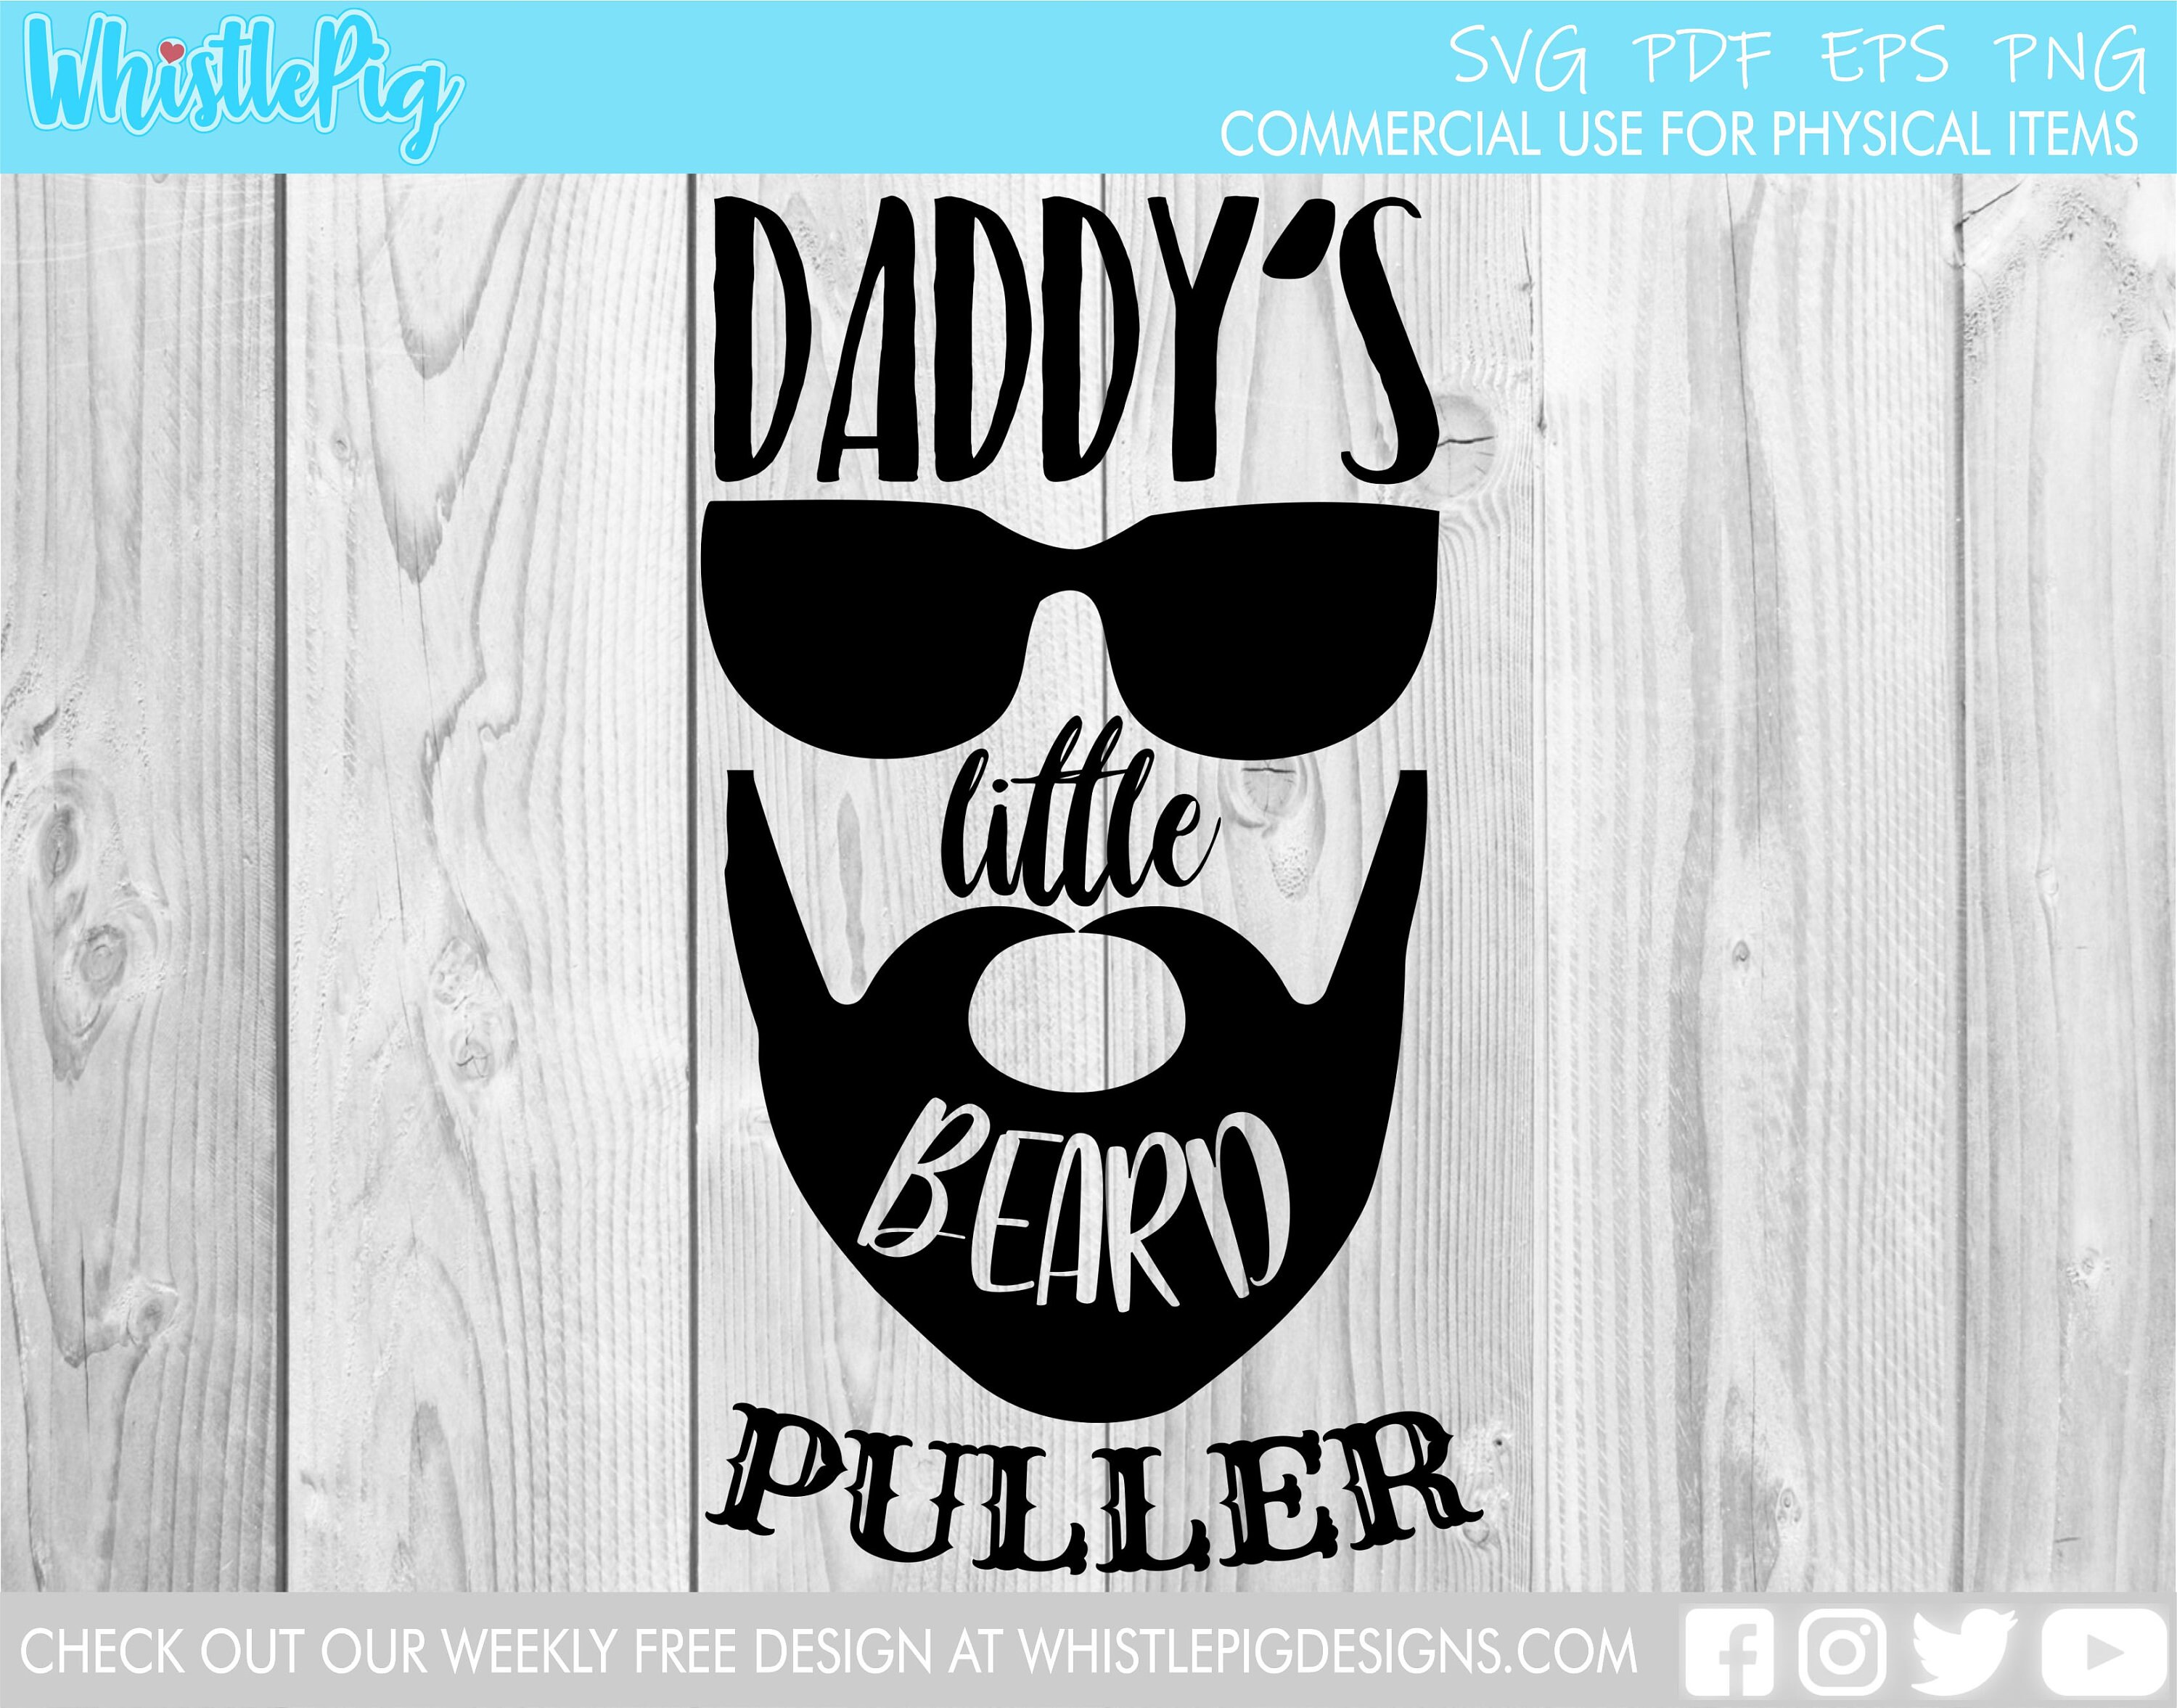 Daddy's Little Beard Puller SVG Beard SVg Daddy svg baby | Etsy